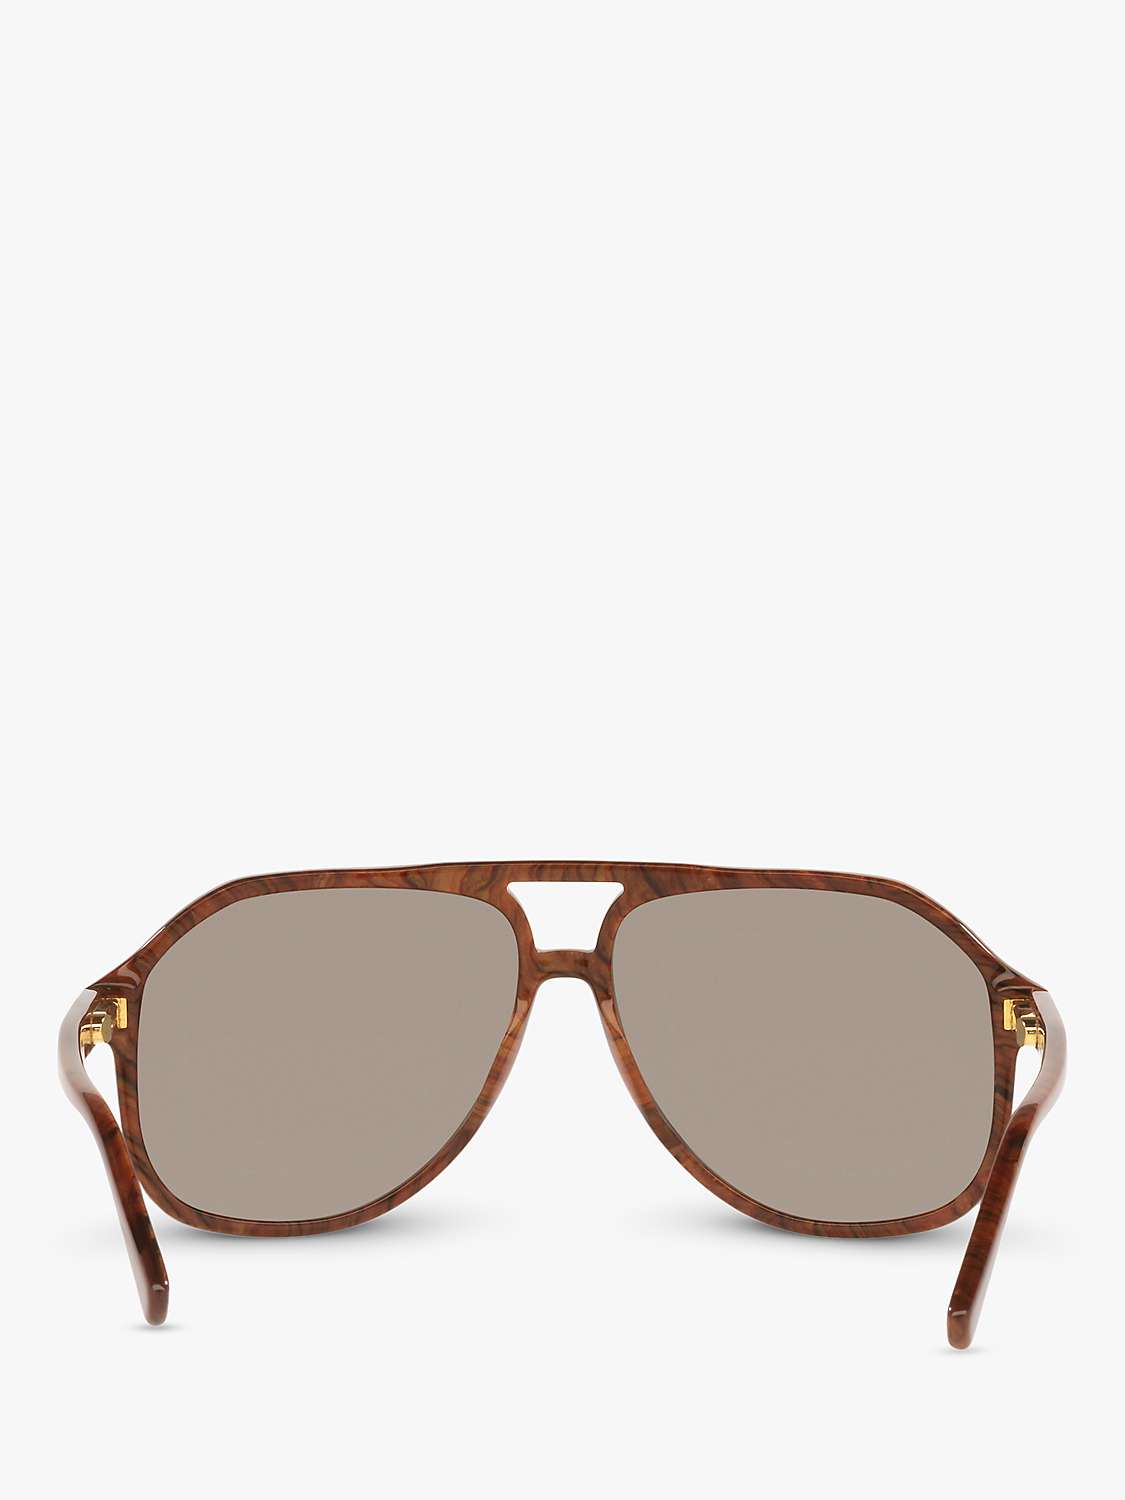 Buy Gucci GG1042S Men's Aviator Sunglasses, Blue Brown/Grey Online at johnlewis.com